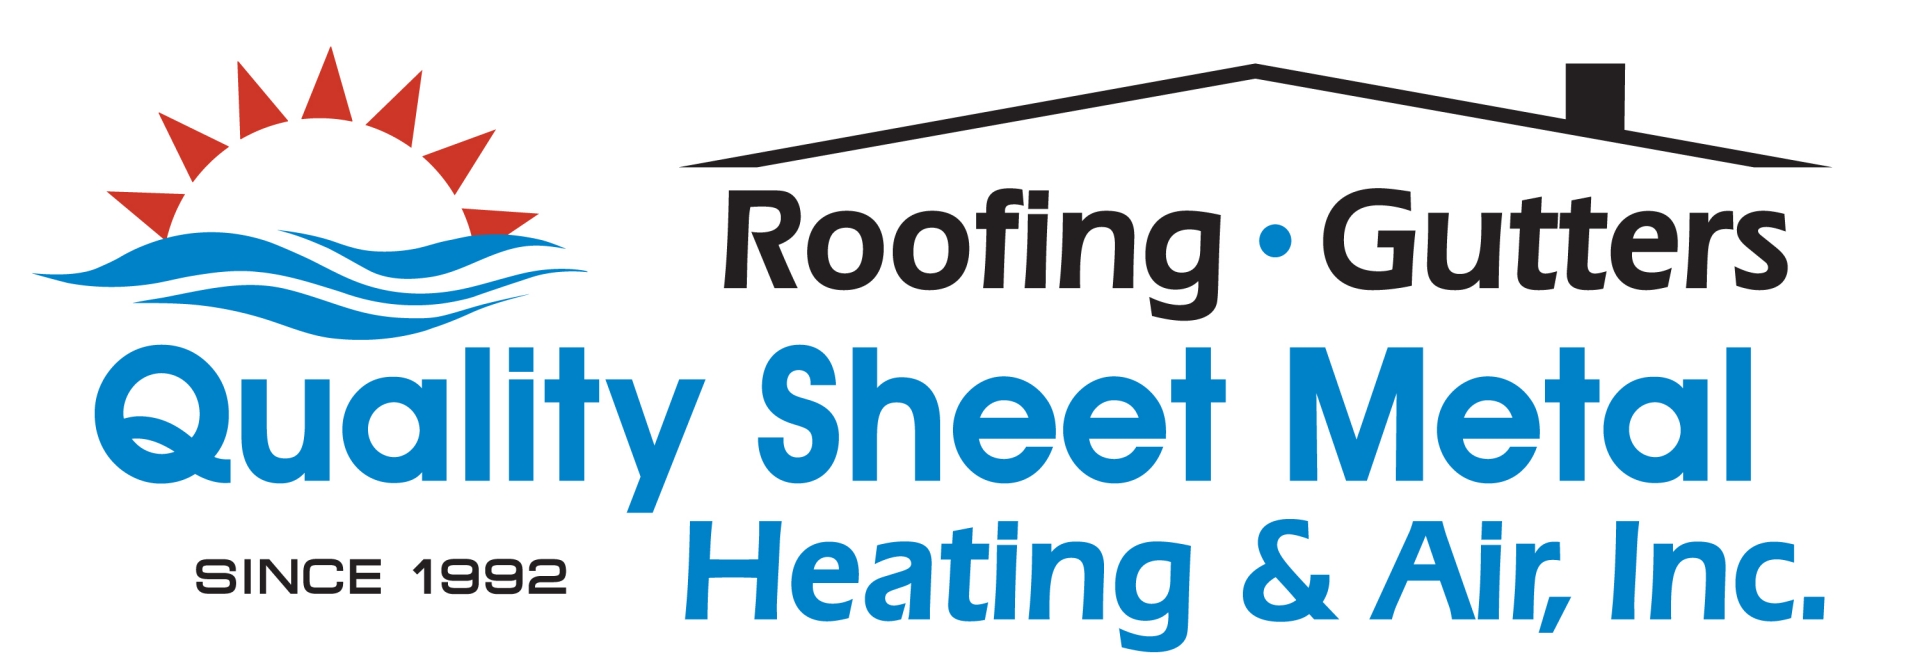 Quality Sheet Metal Heating & Air Inc. company logo